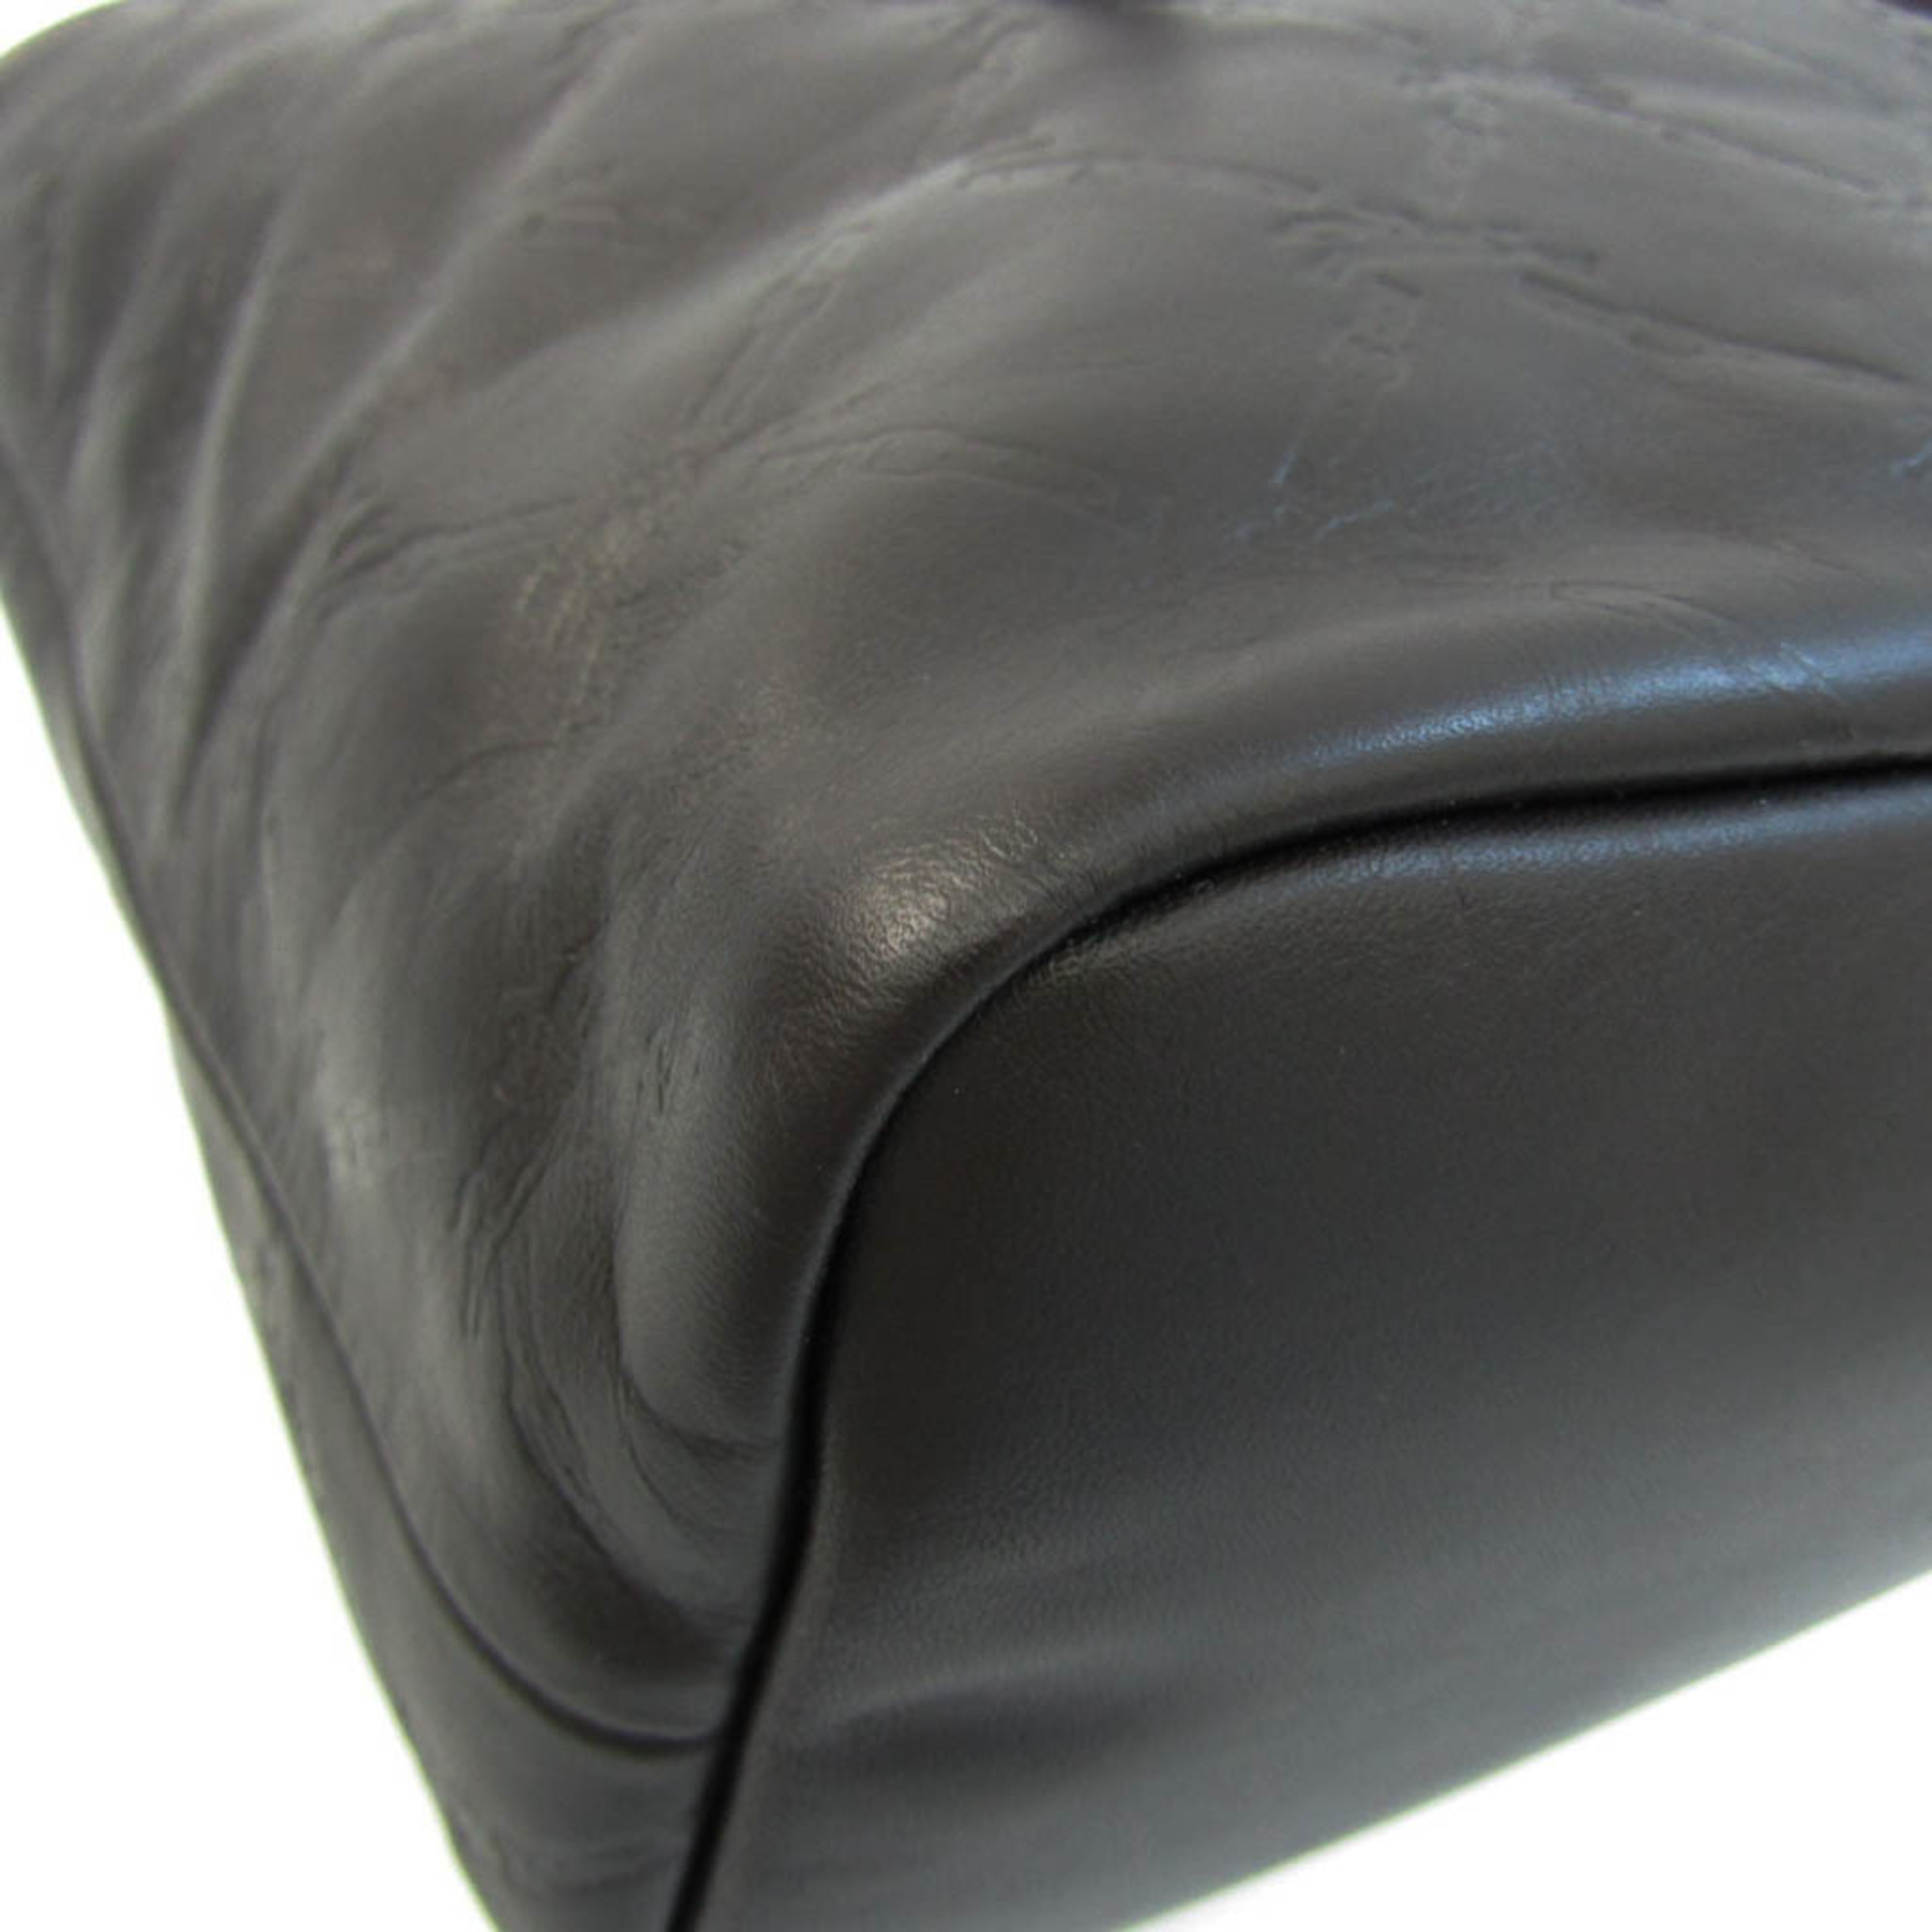 Longchamp 1524 746 813 Women's Leather Tote Bag Dark Brown